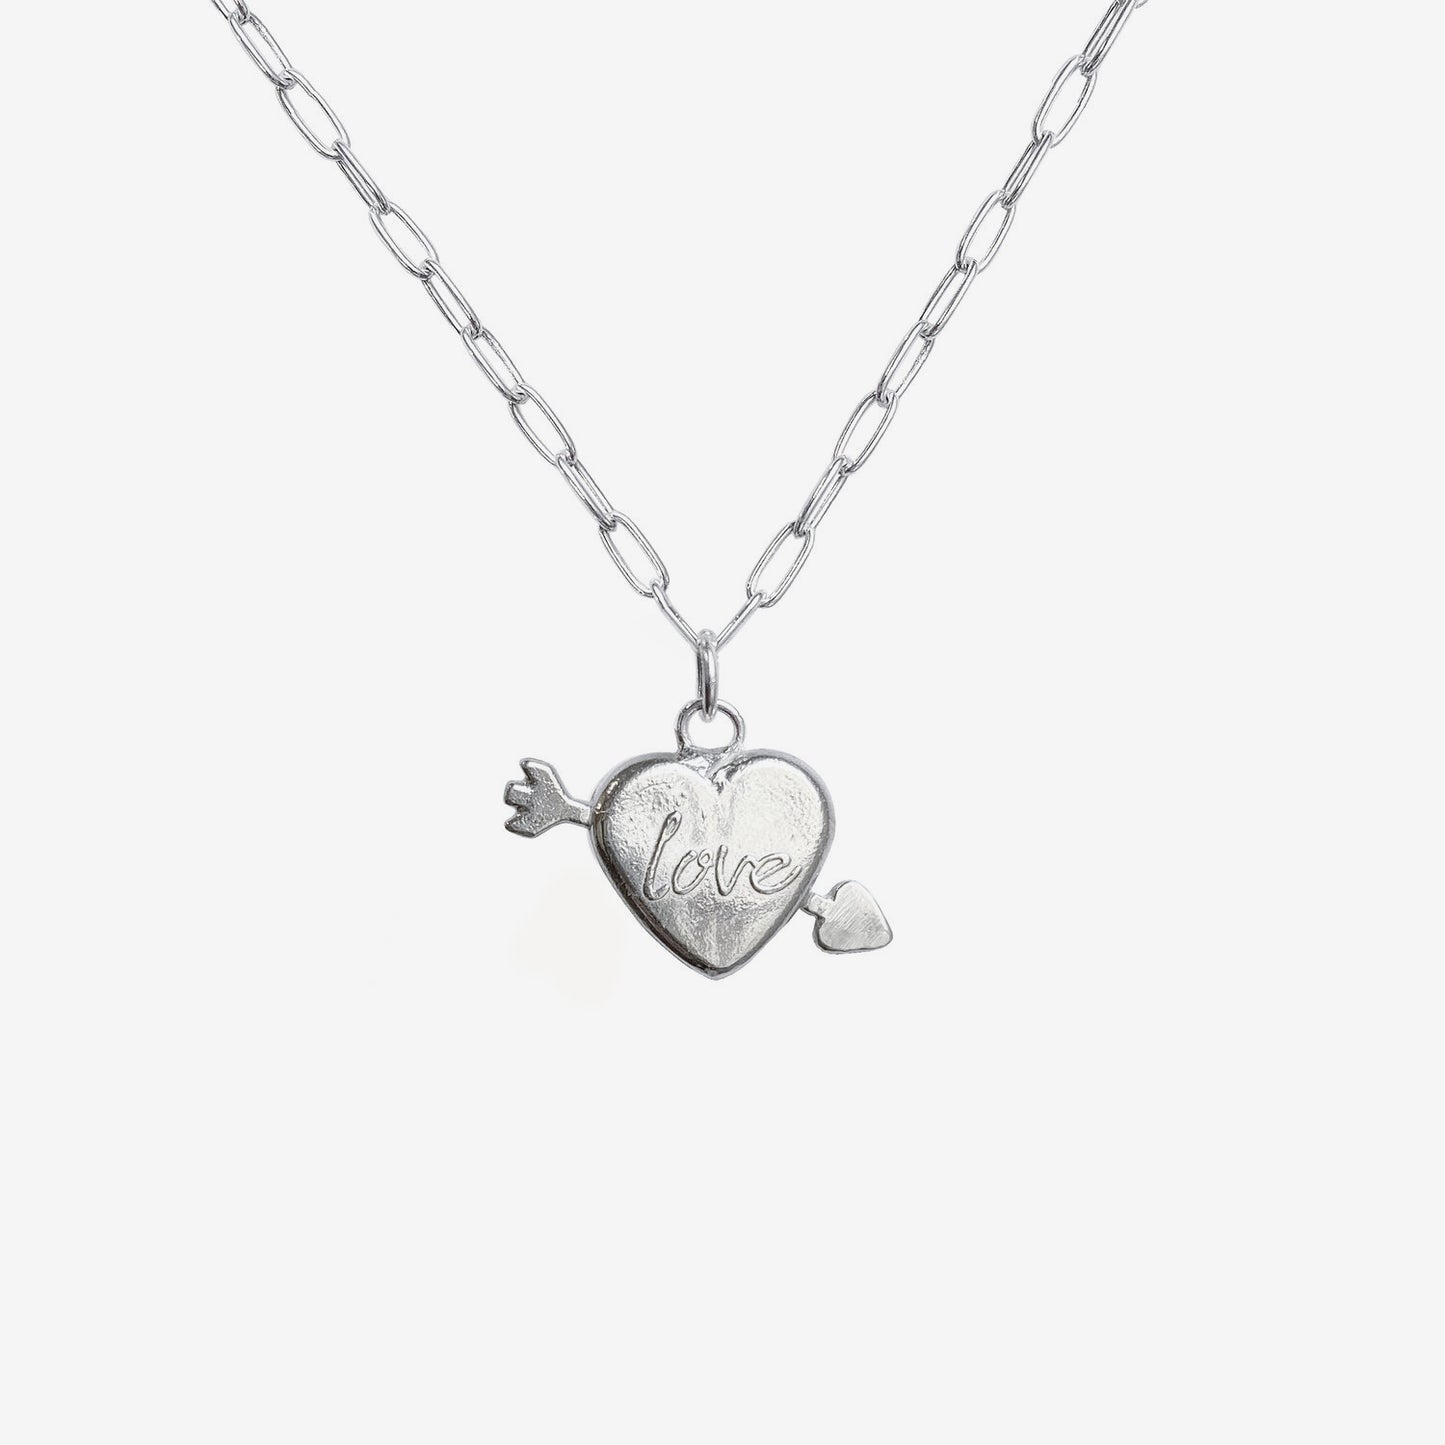 OK Cupid Necklace - Silver